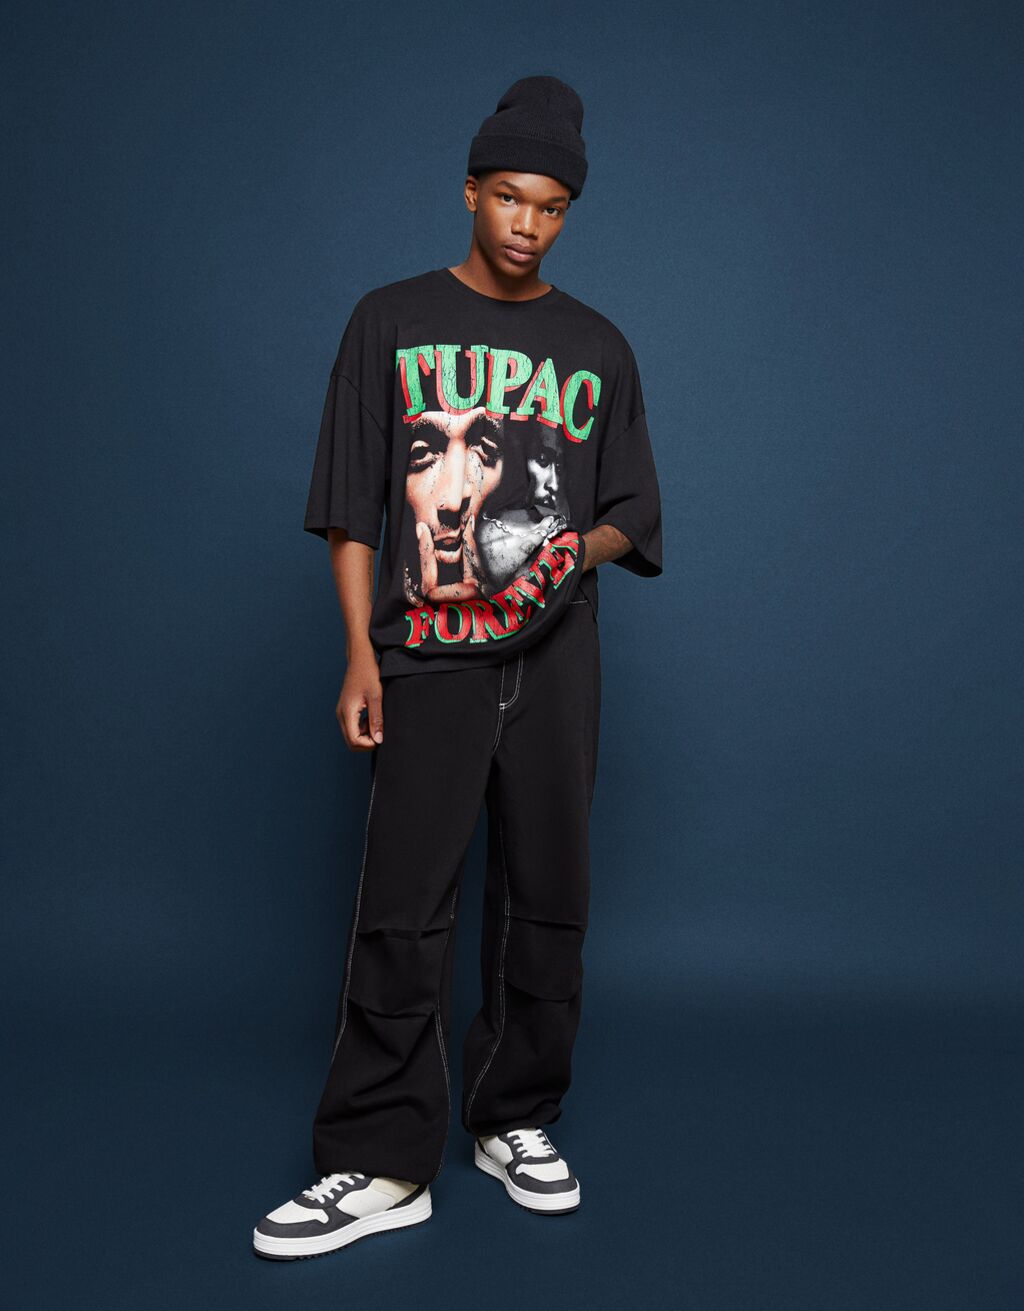 Extra volné tričko Tupac s krátkými rukávy